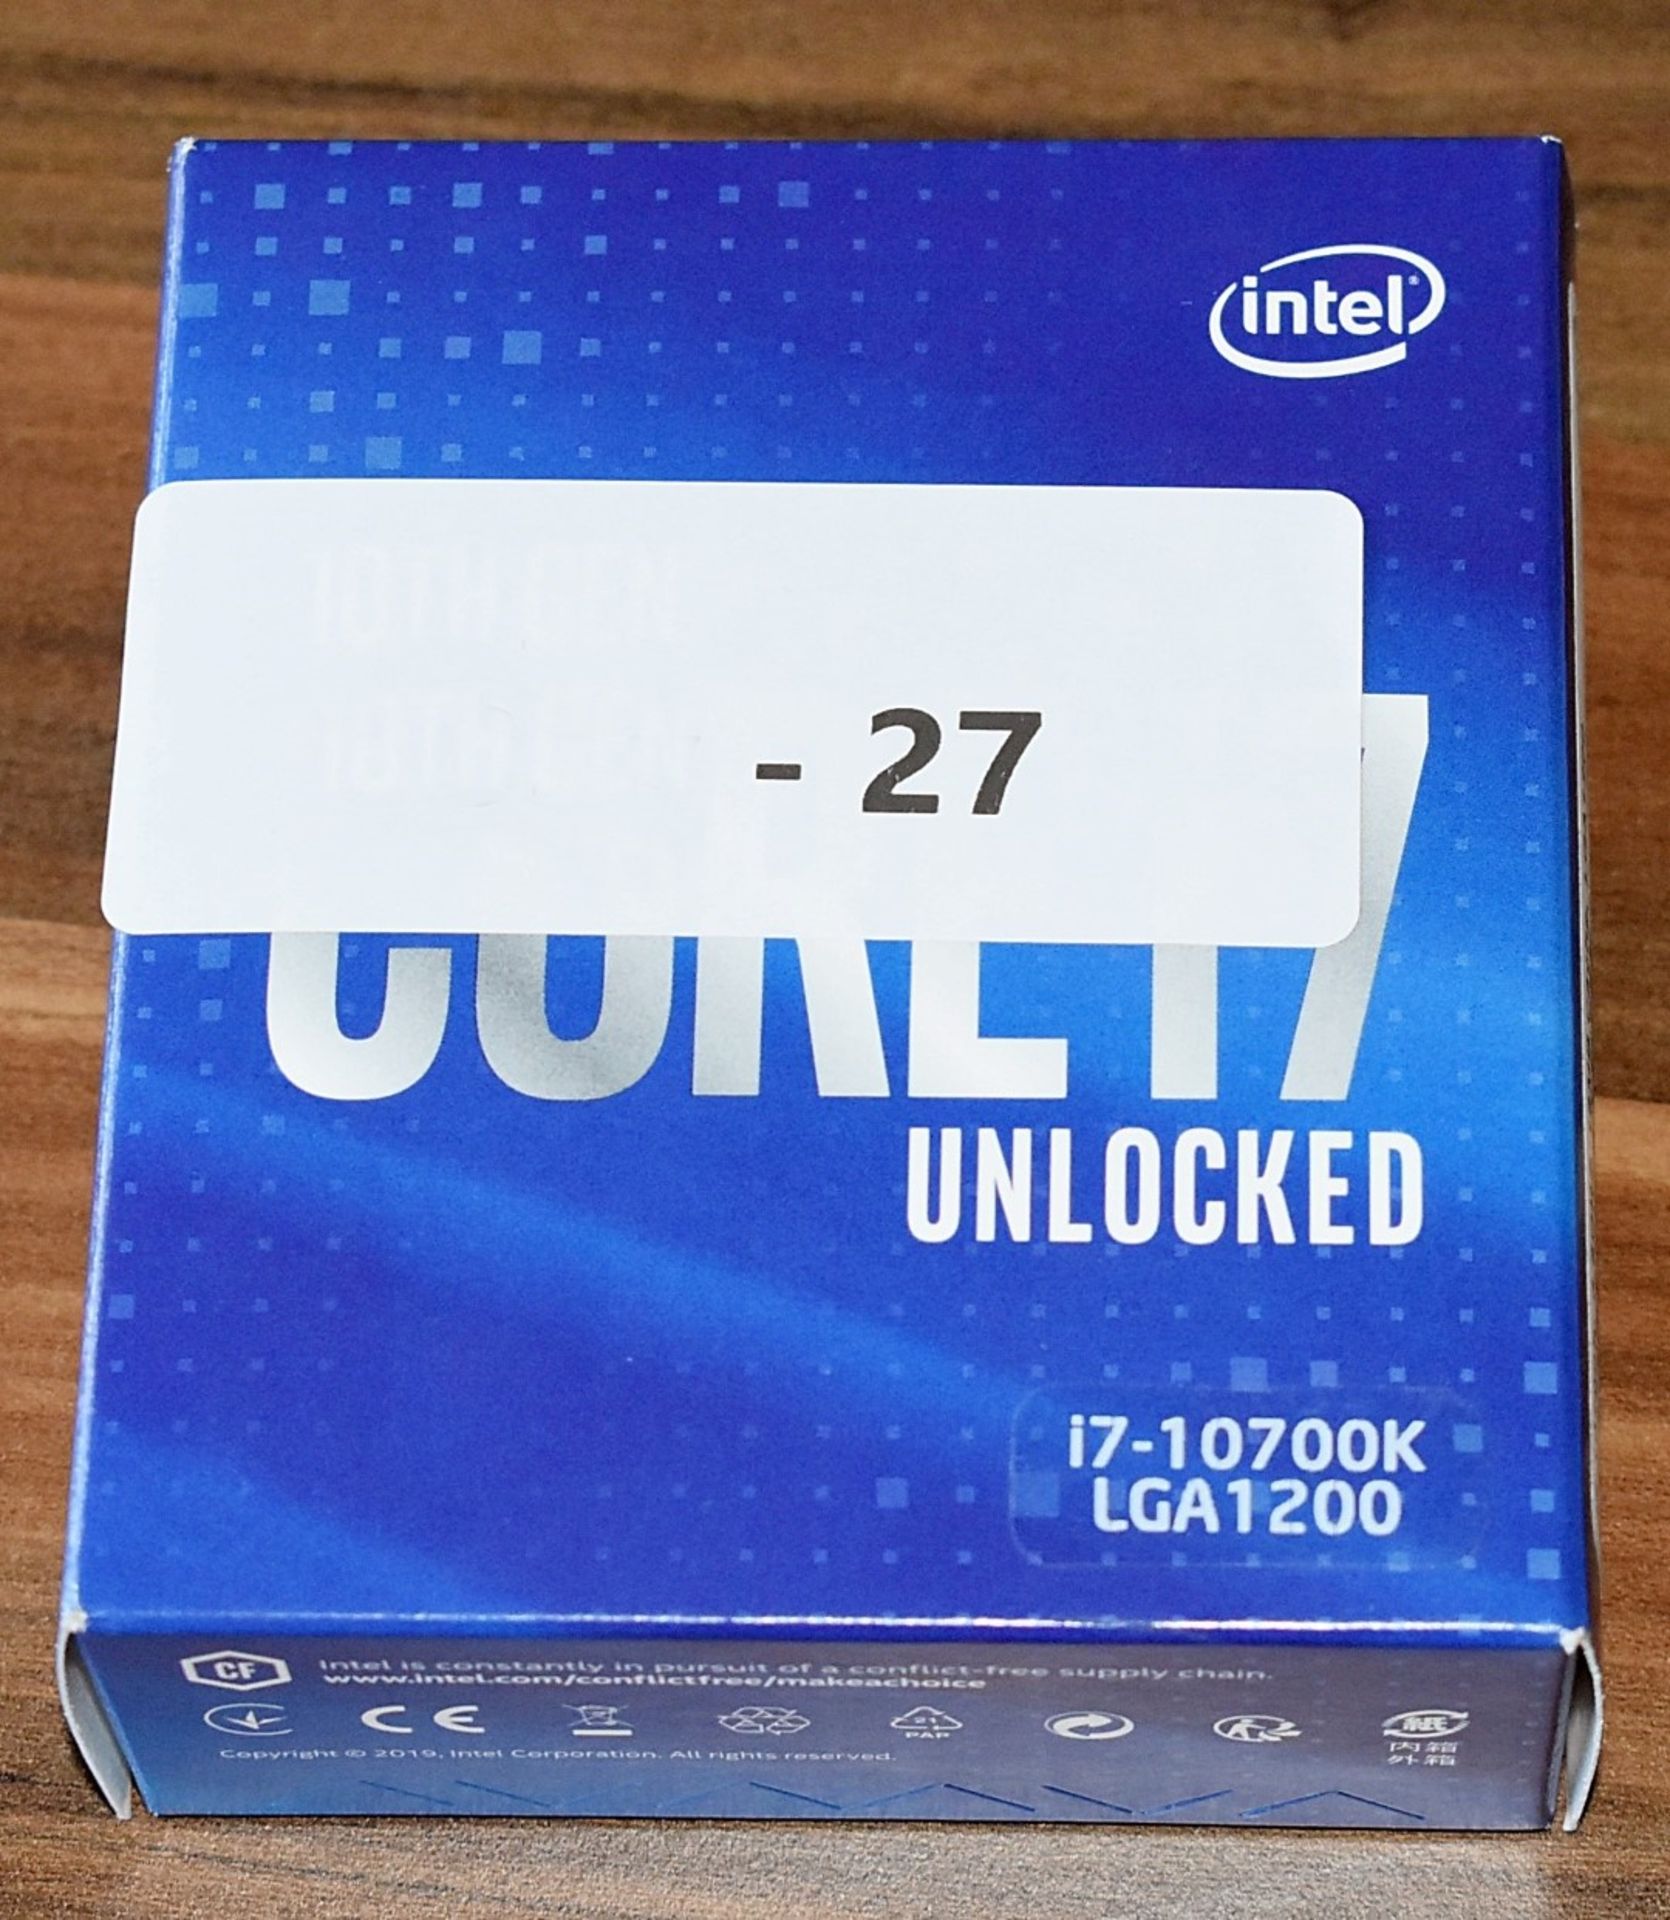 1 x Intel Core i7-10700K LGA1200 10th Gen Comet Lake Processor - 5.1ghz Boost Clock With 8 Cores